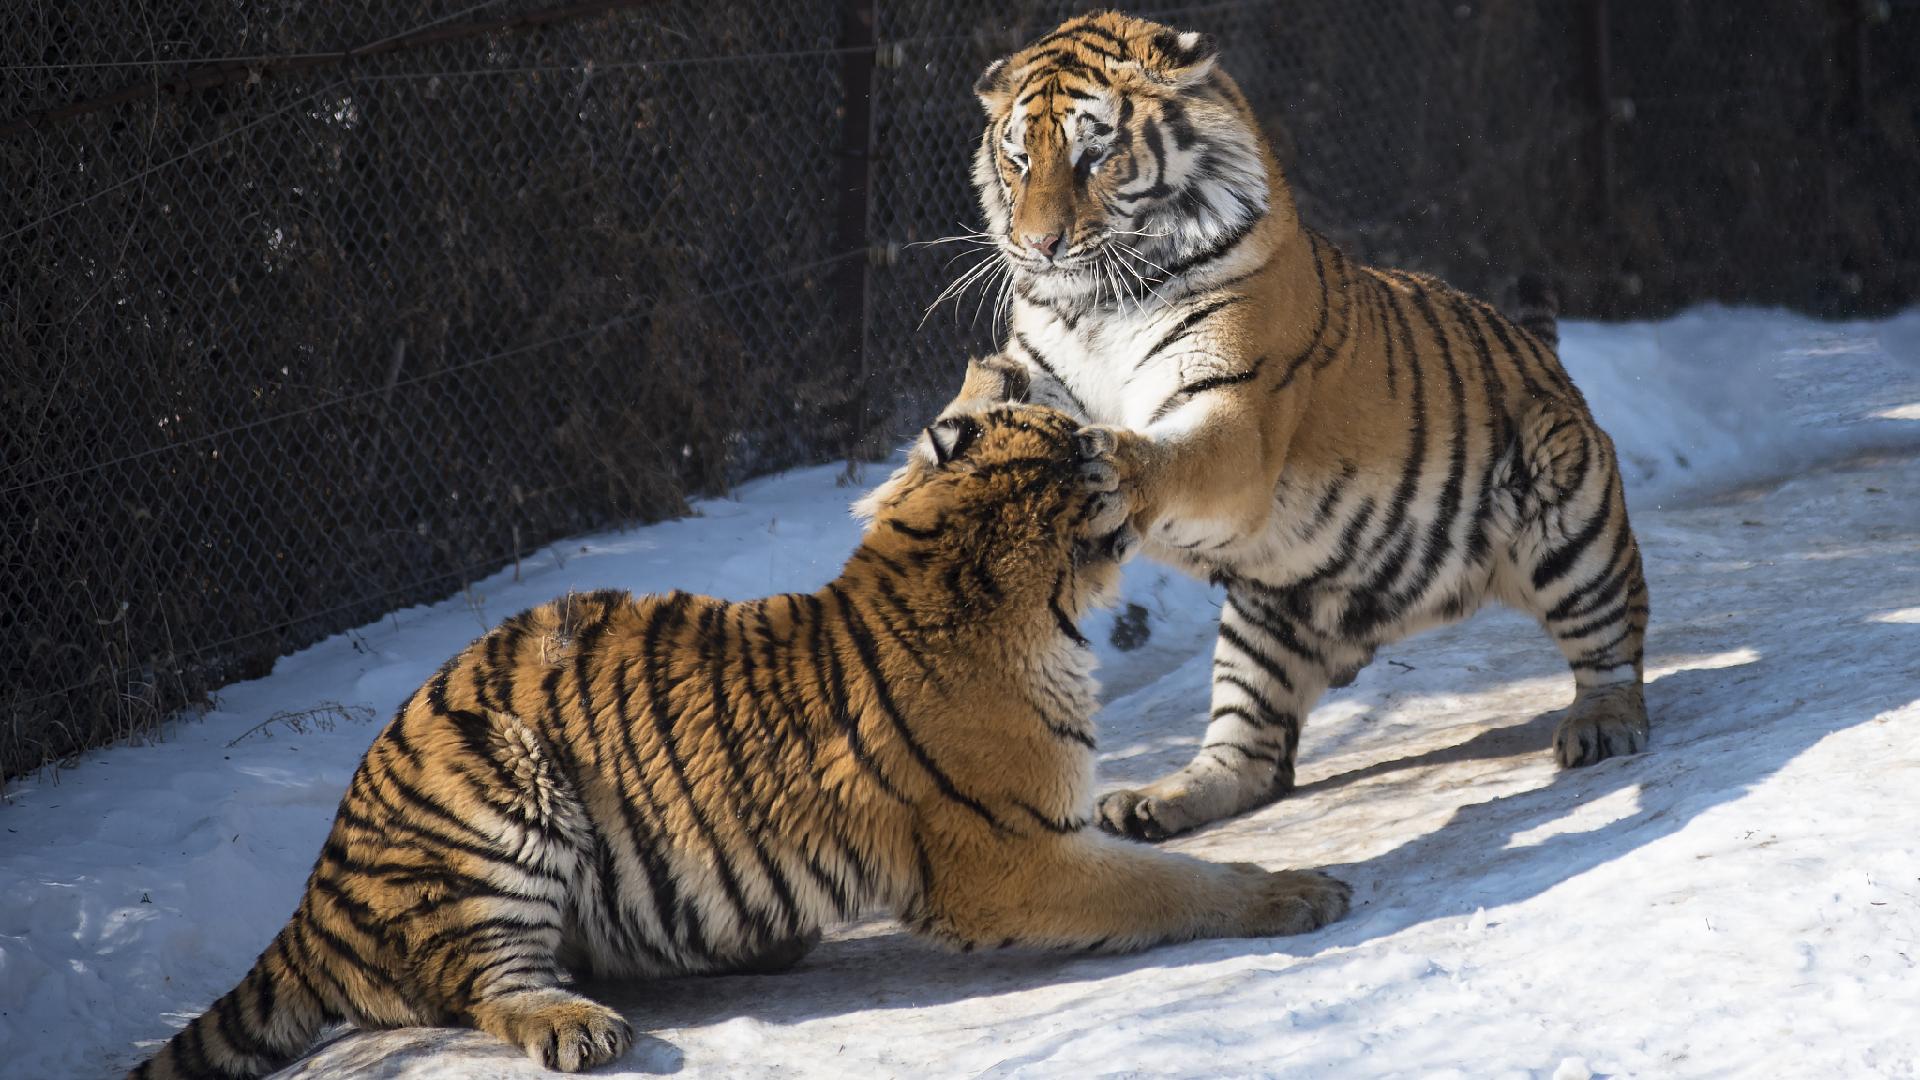 Siberian tigers play in snow in NE China - CGTN